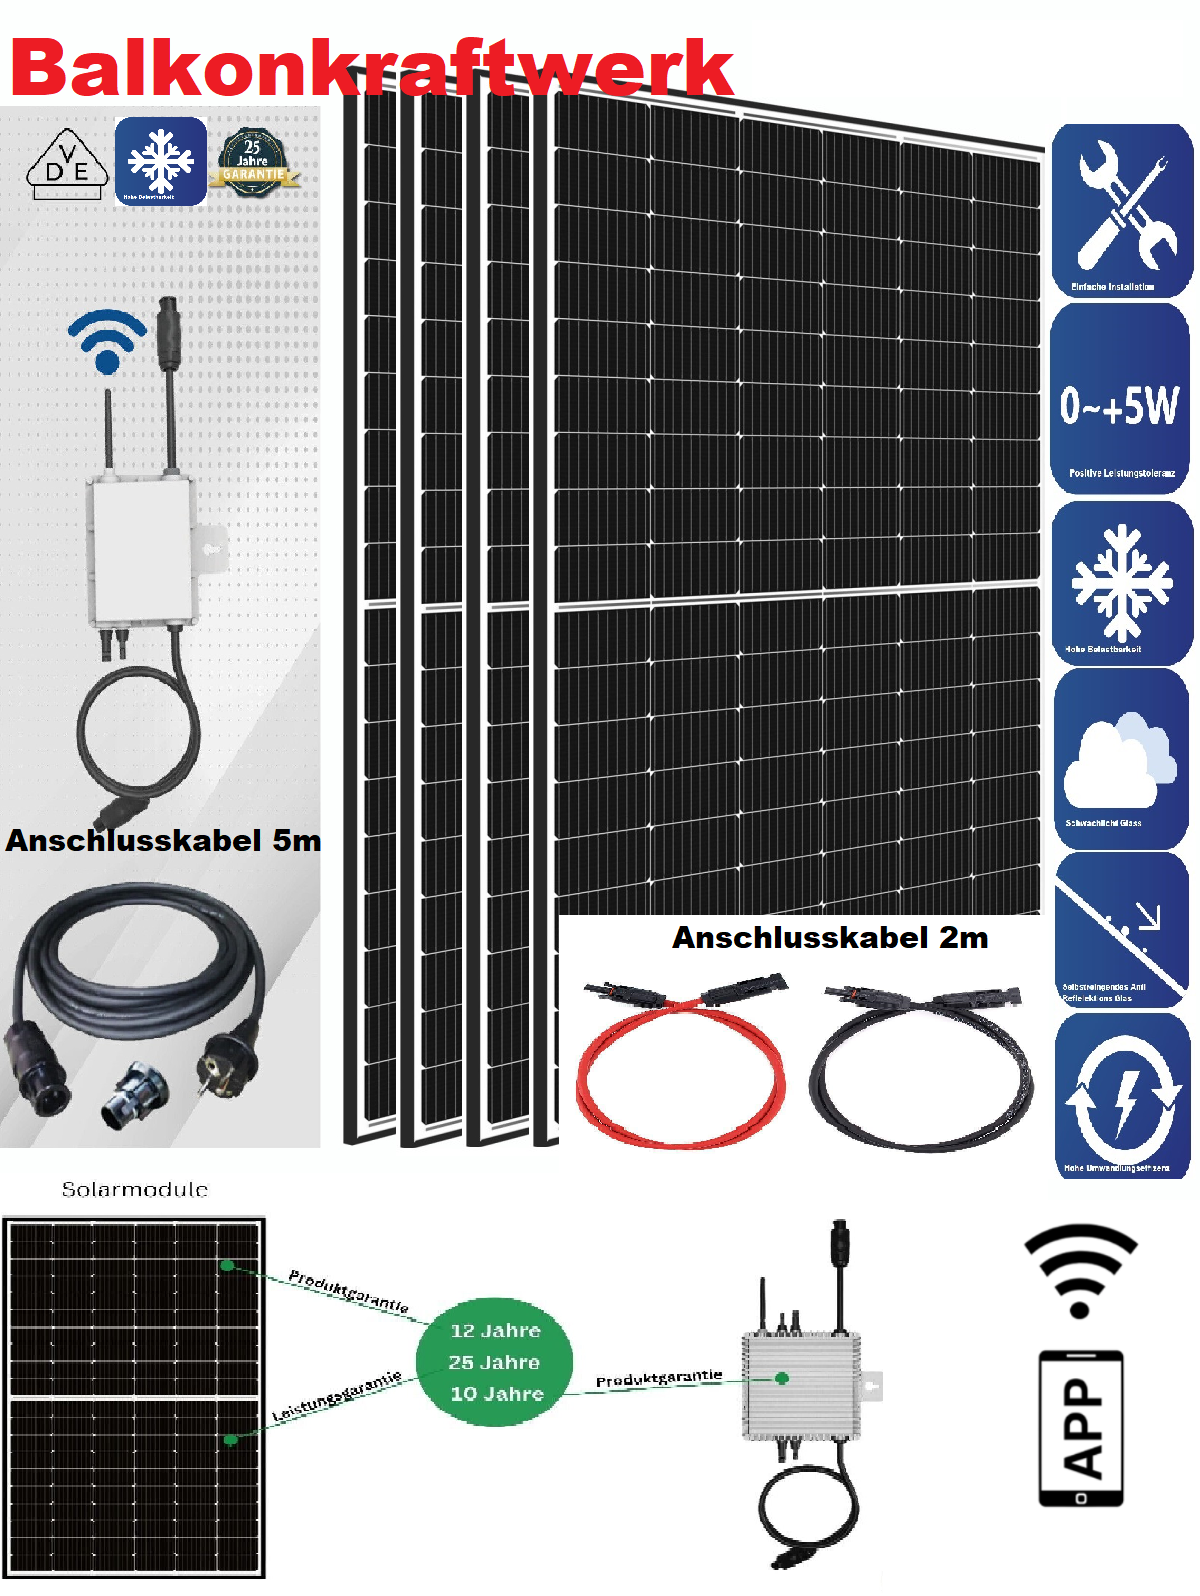 Balkonkraftwerk 1720 W/ 1600 W Photovoltaik Solaranlage Steckerfertig WIFI Smart